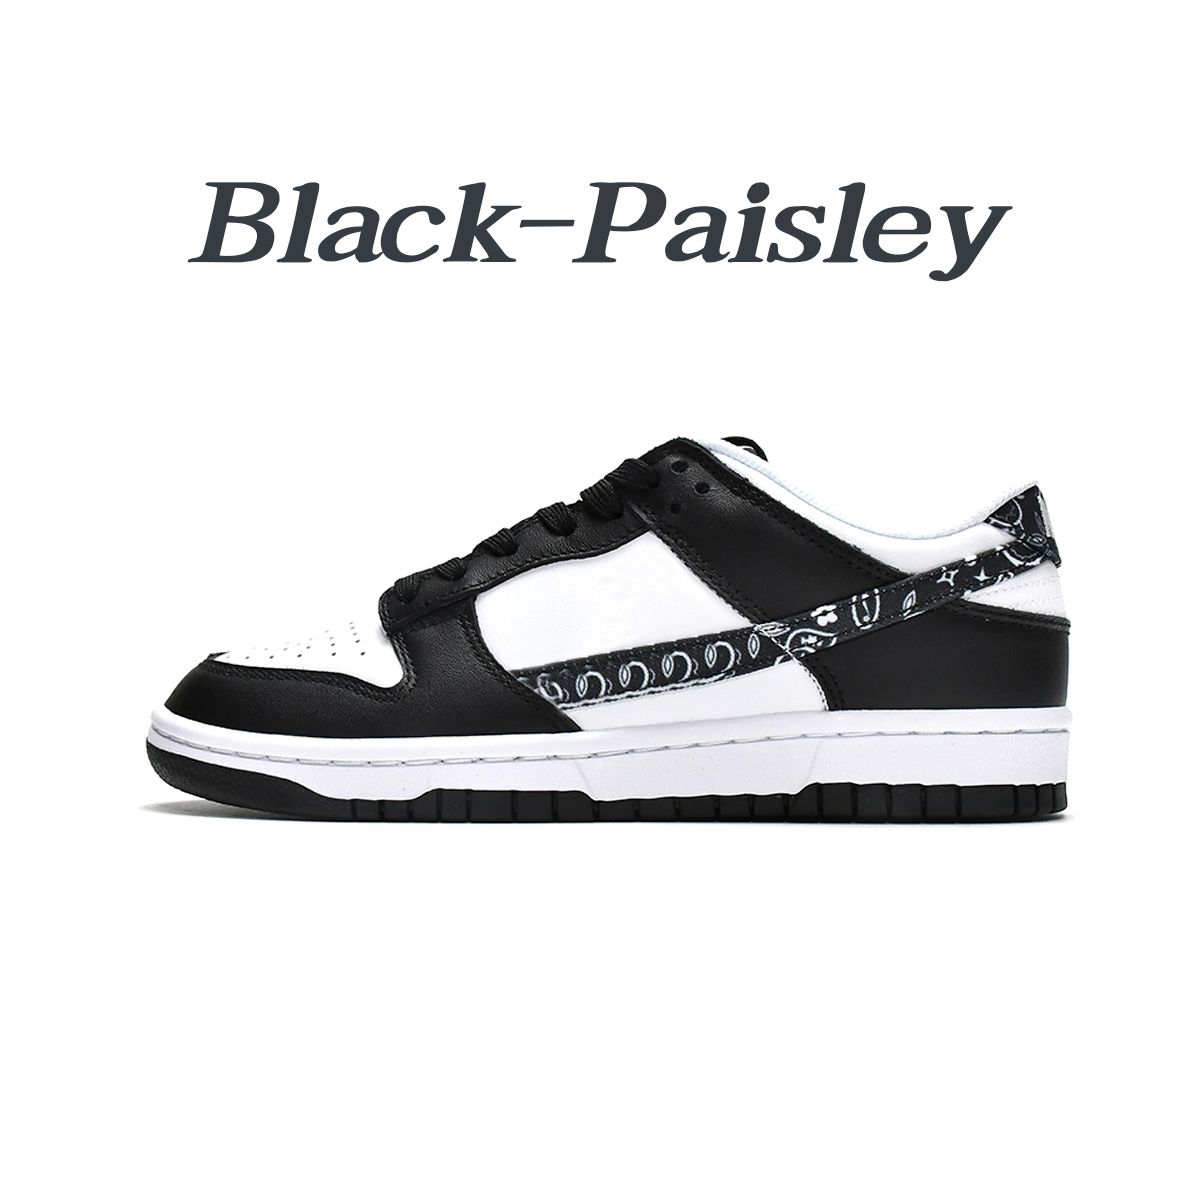 2. Negro-Paisley